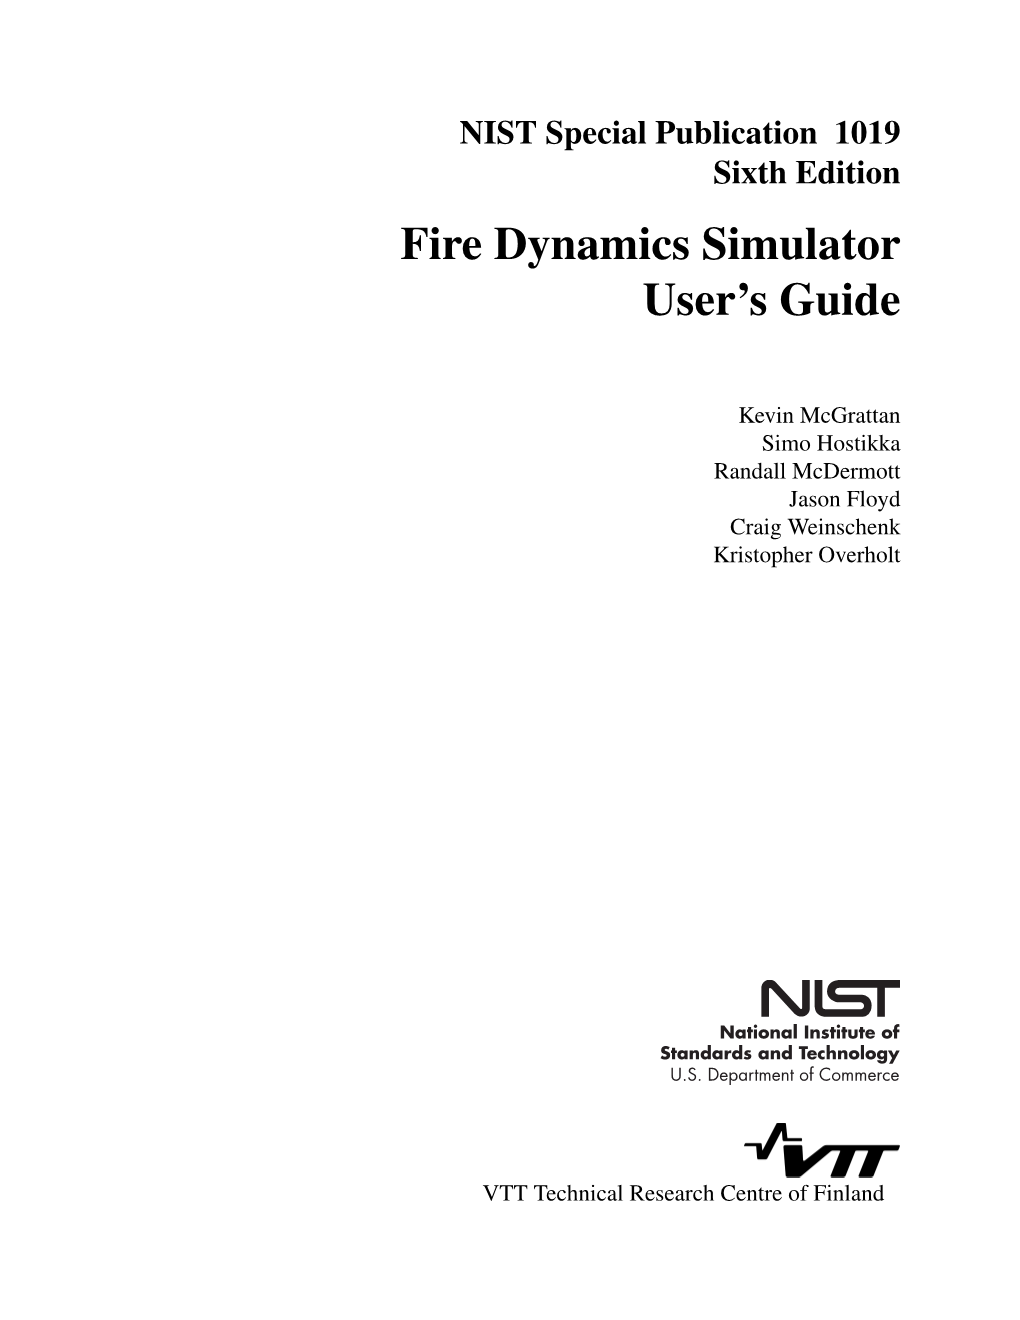 Fire Dynamics Simulator User's Guide